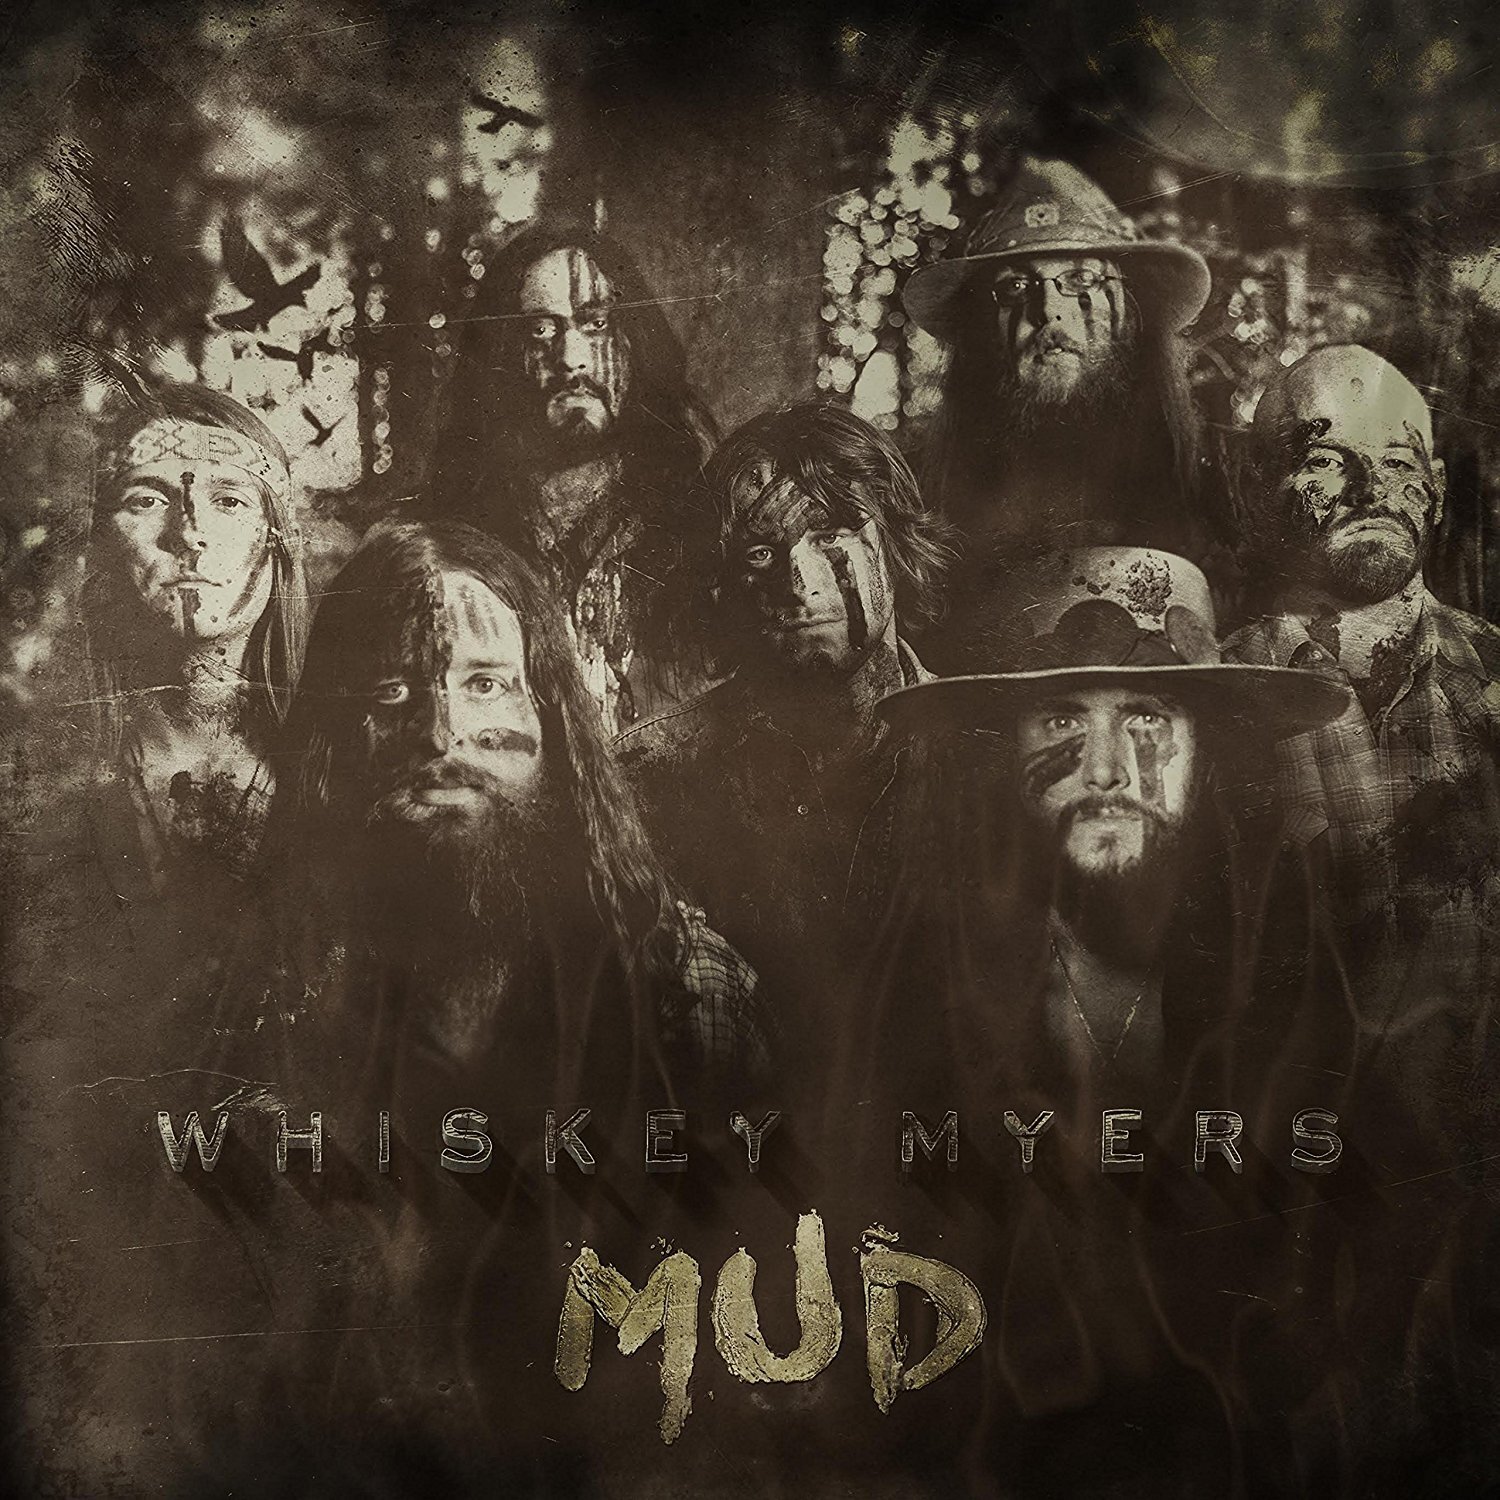 Whiskey Myers Mud.jpg